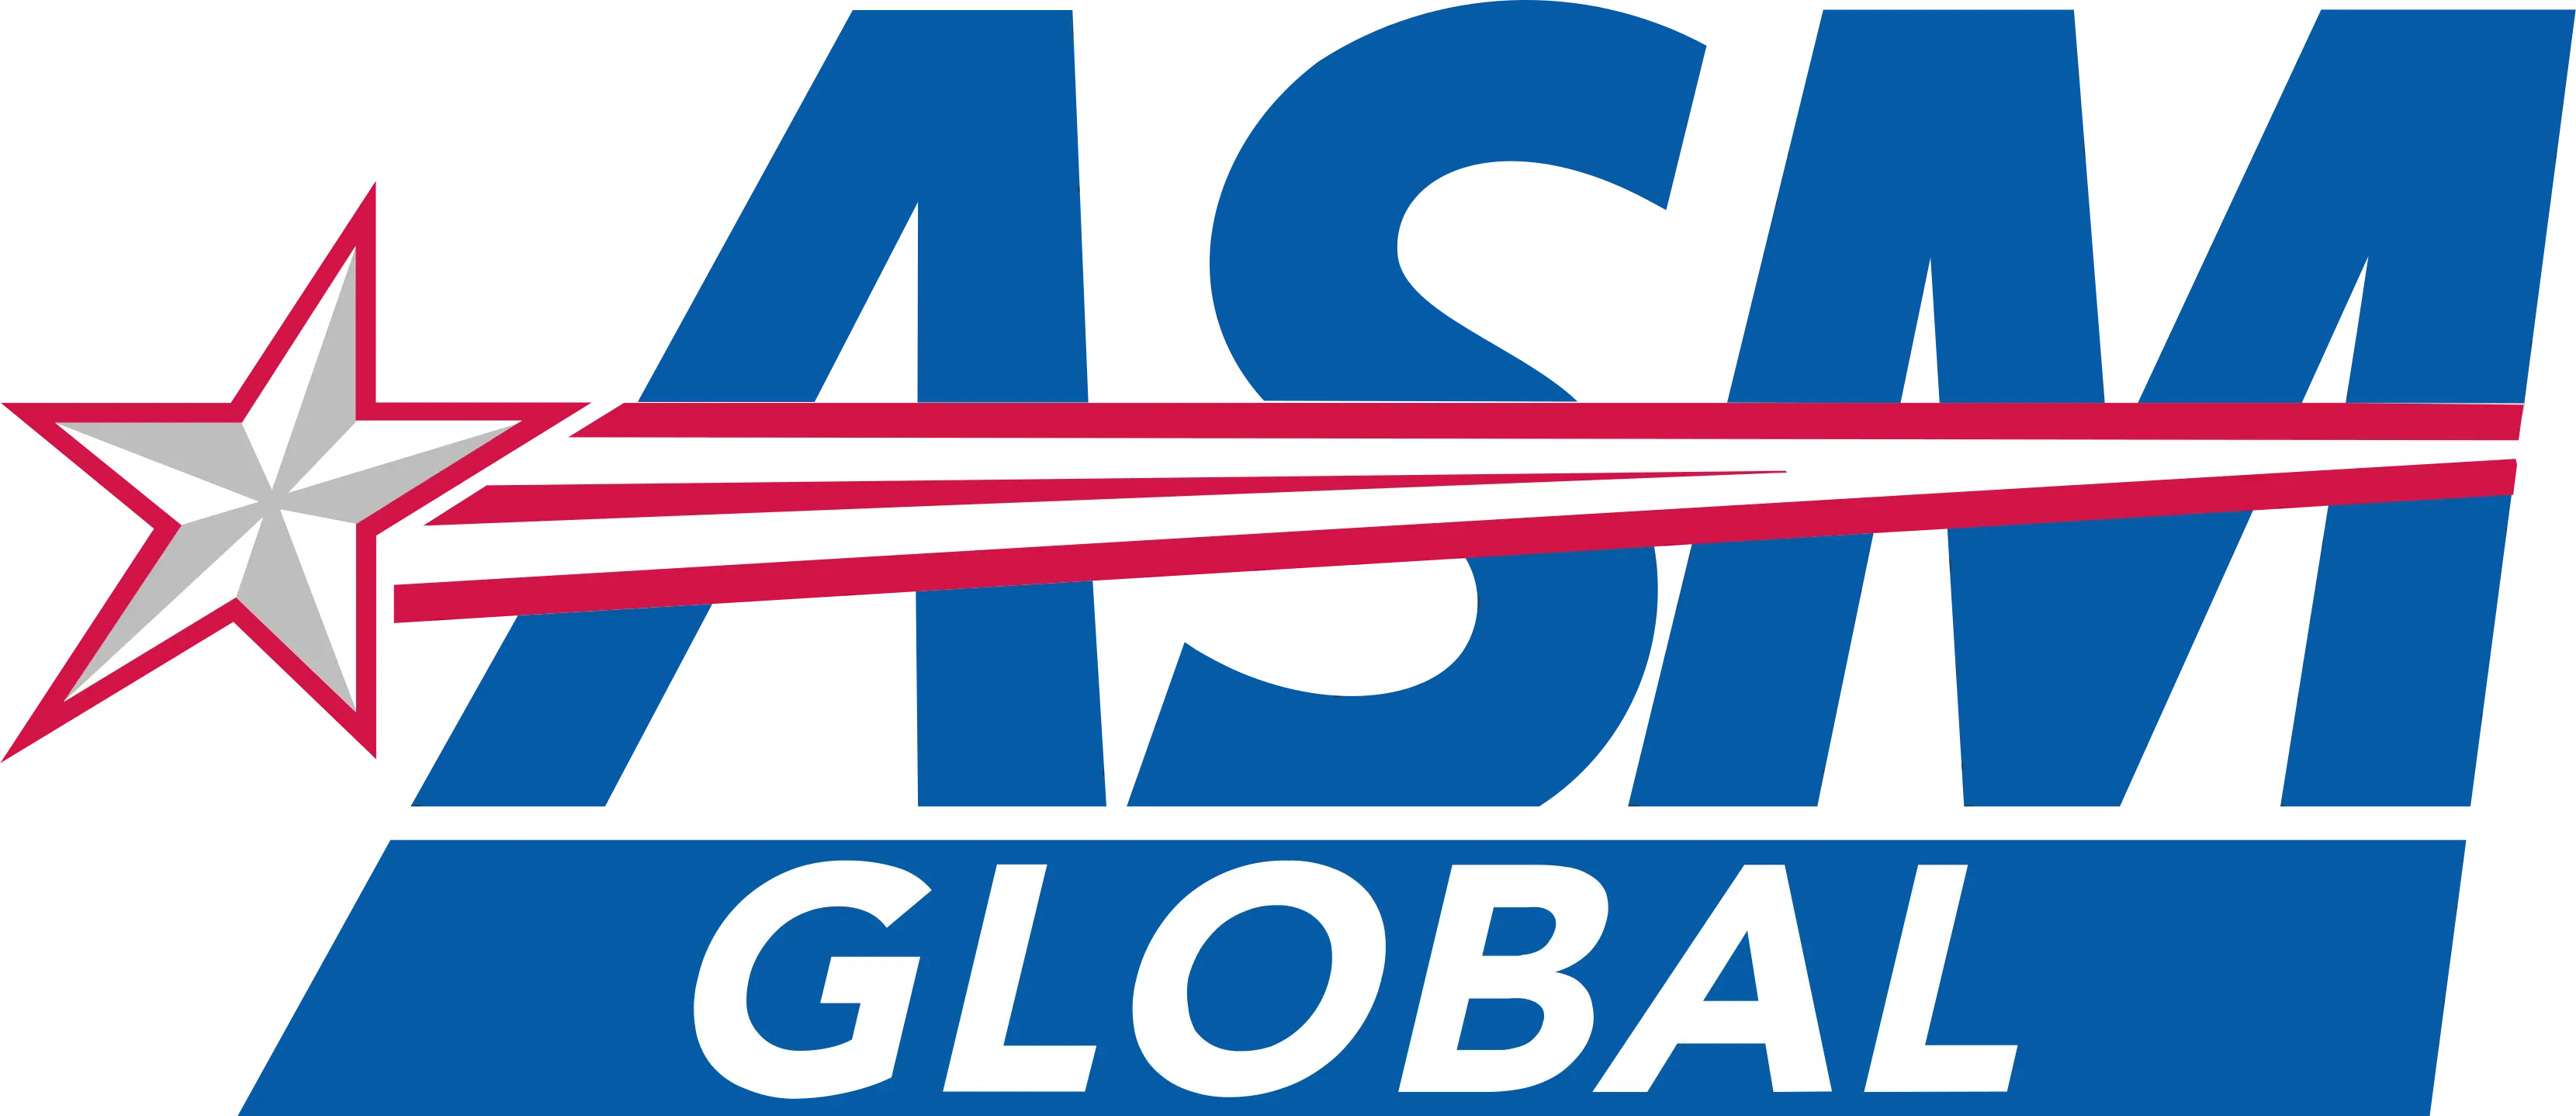 The ASM Global logo